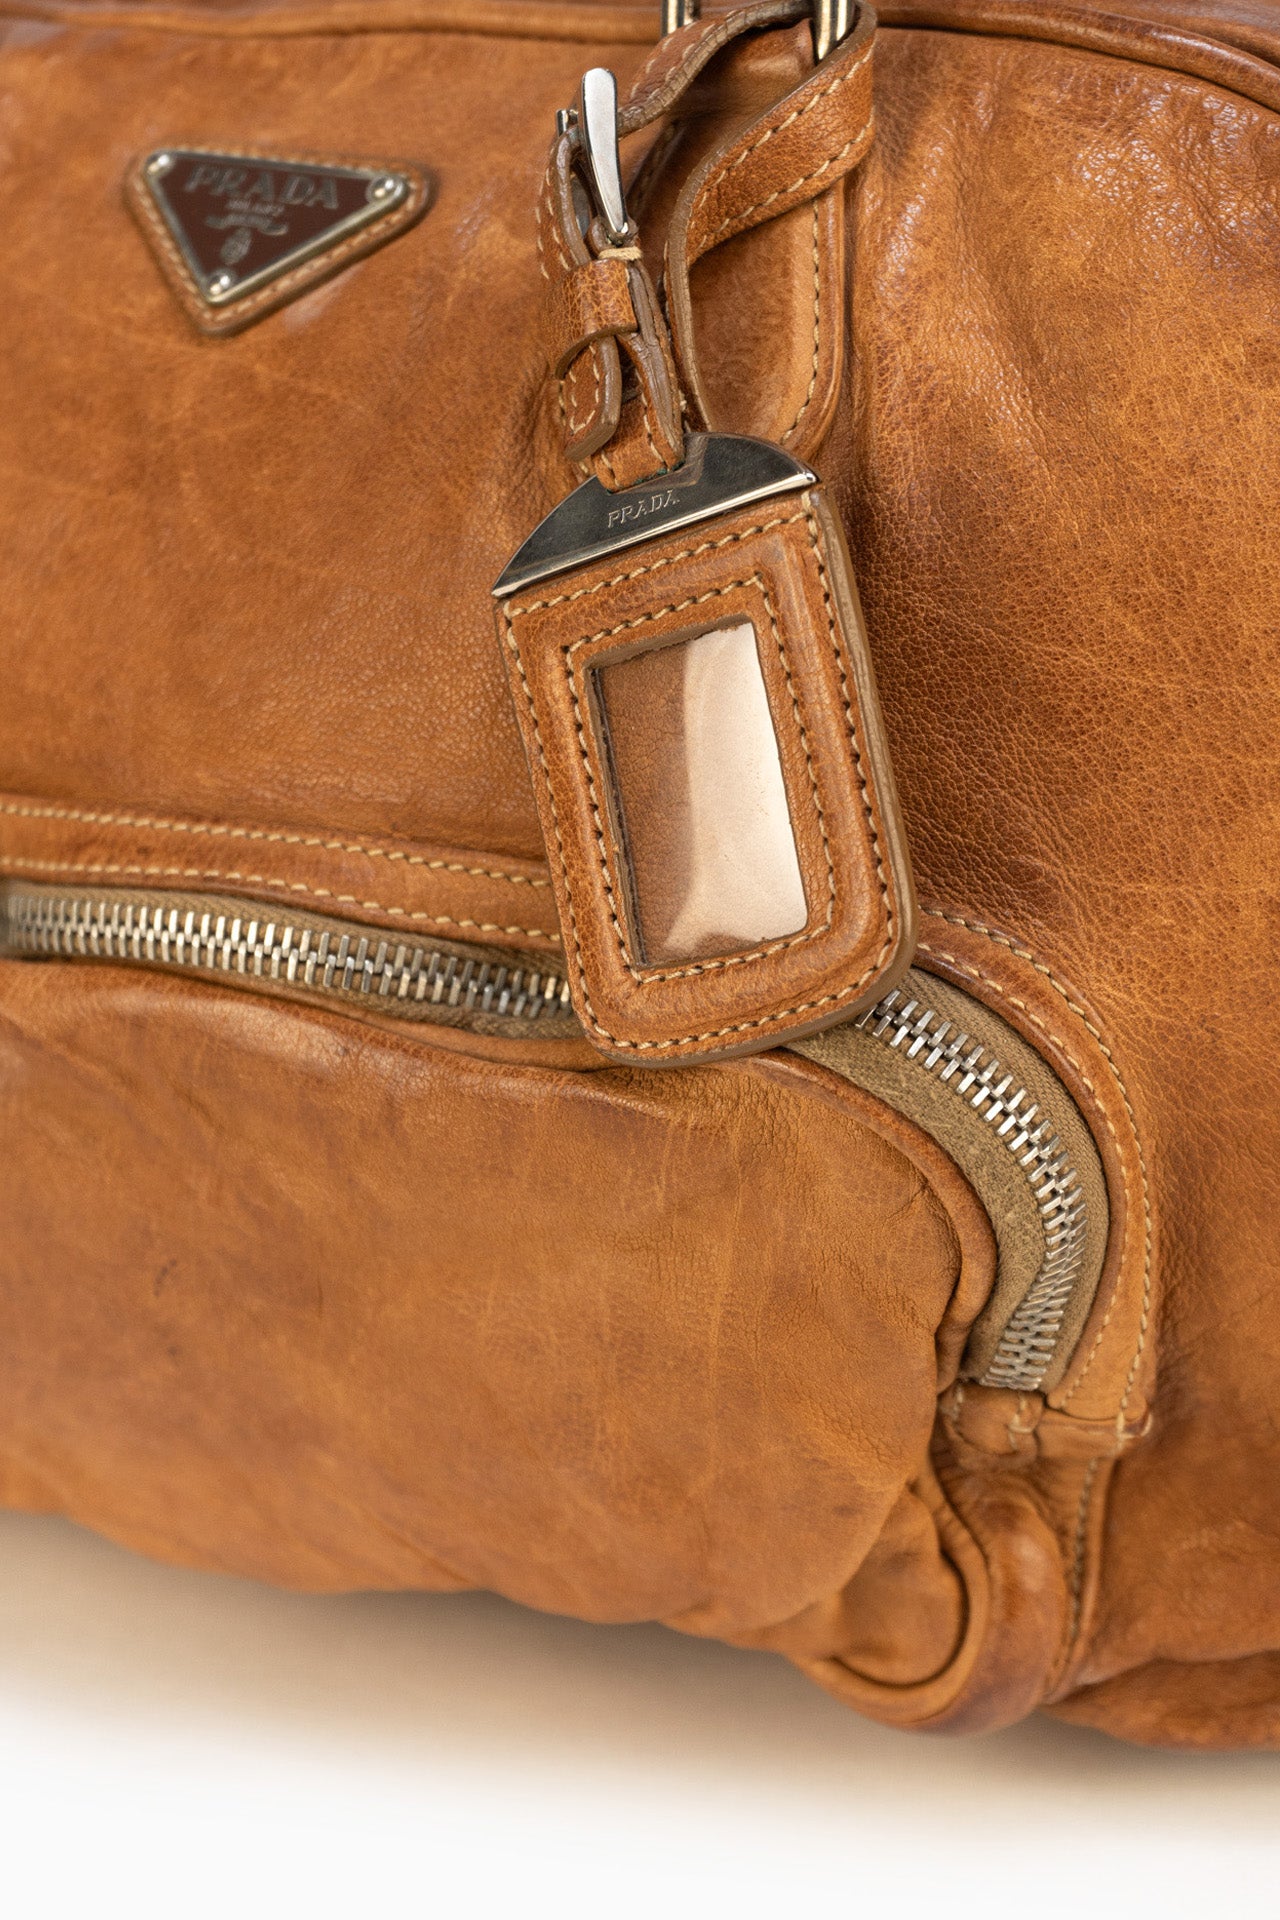 Prada Leather Hand Bag In Camel